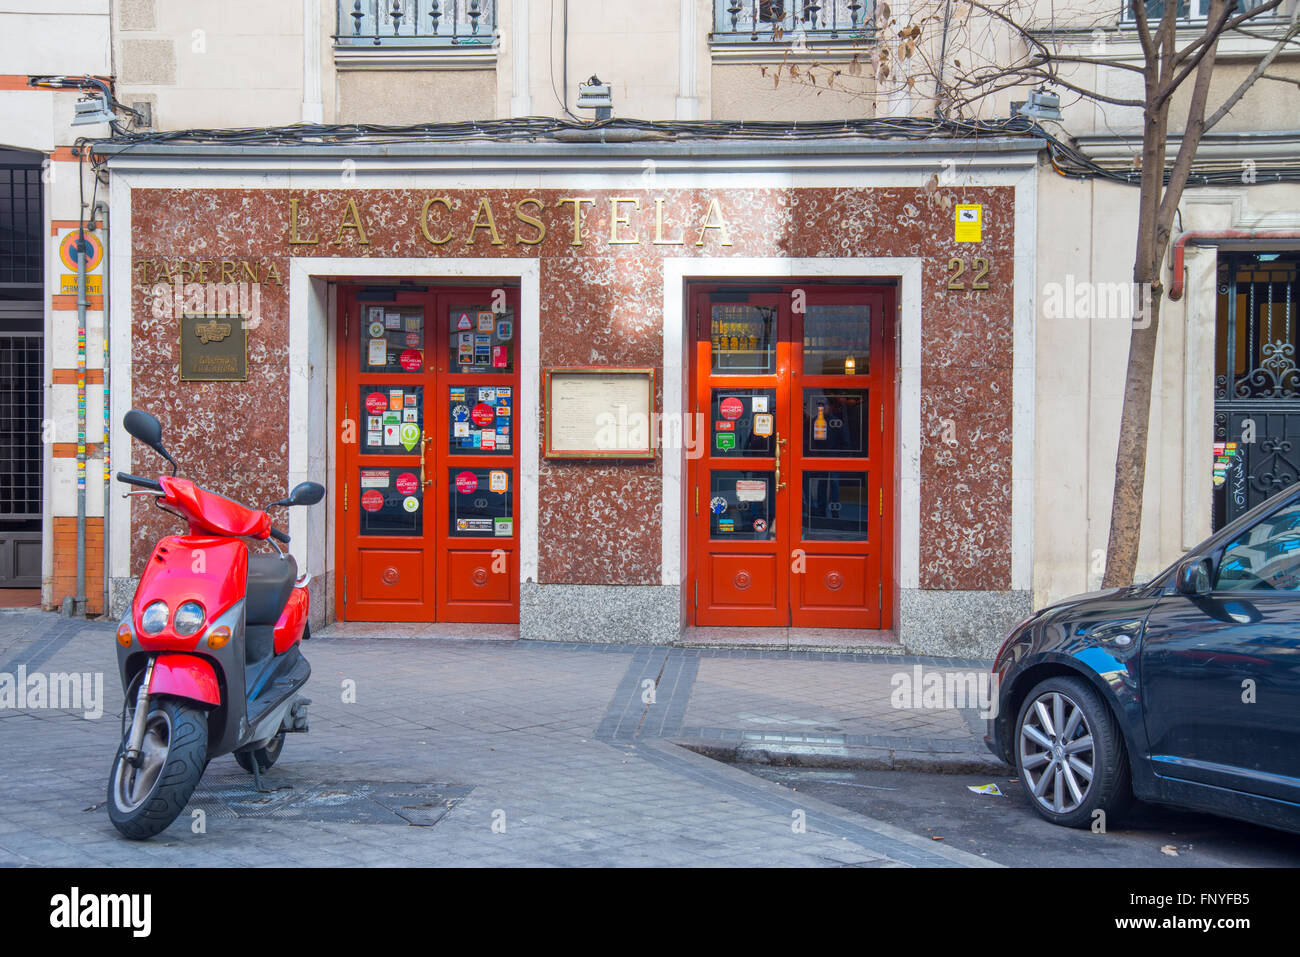 Facade of La Castela tavern. Doctor Castelo street, Madrid, Spain. Stock Photo